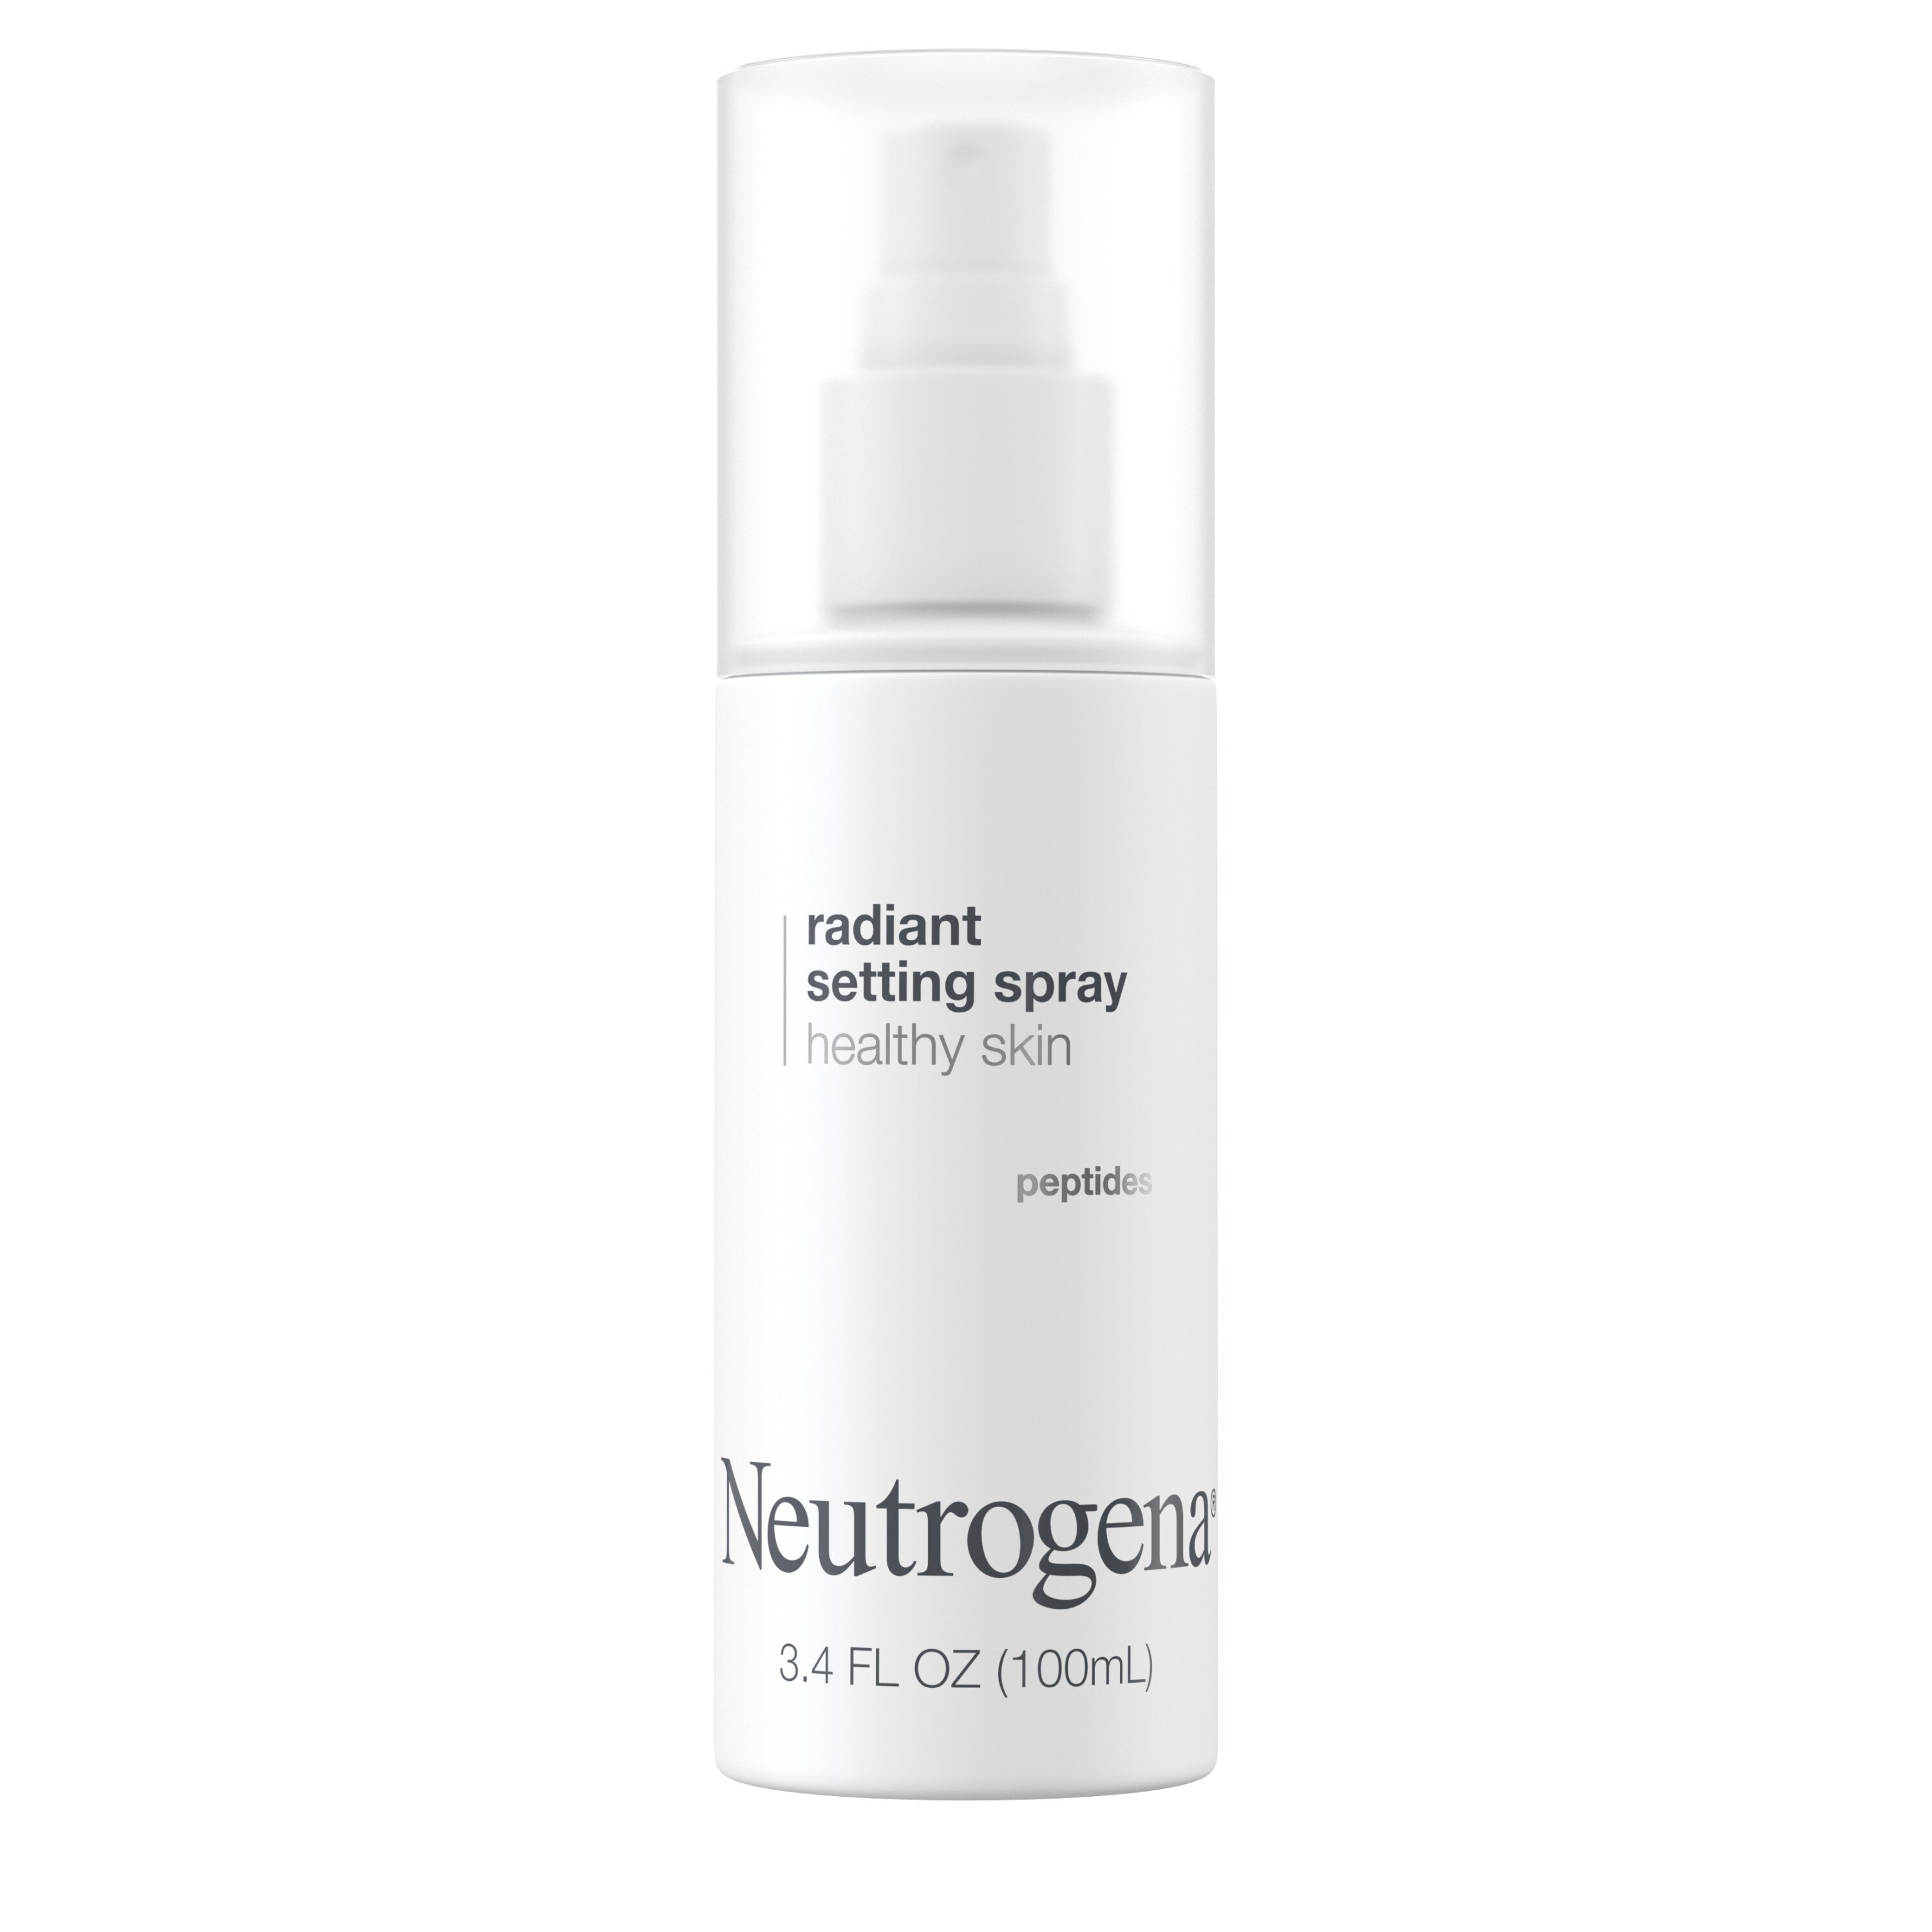 Neutrogena Radiant Makeup Setting Spray With Peptides, 3.4 Oz , CVS